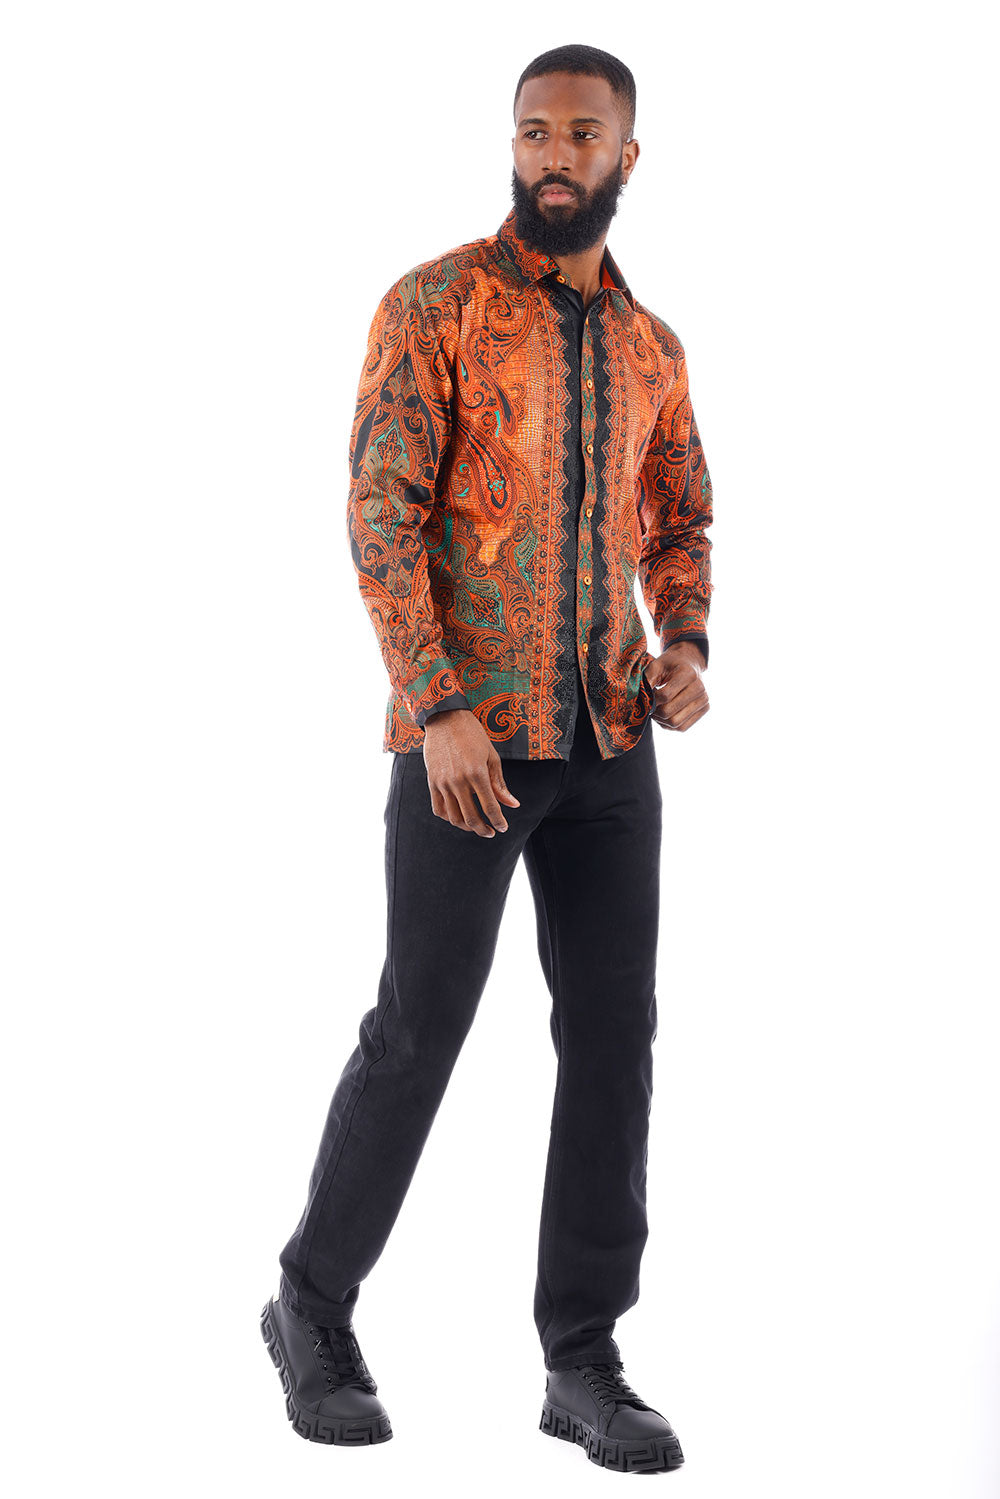 BARABAS Men's Rhinestone Floral Paisley Long Sleeve Shirts 3SPR433 Orange